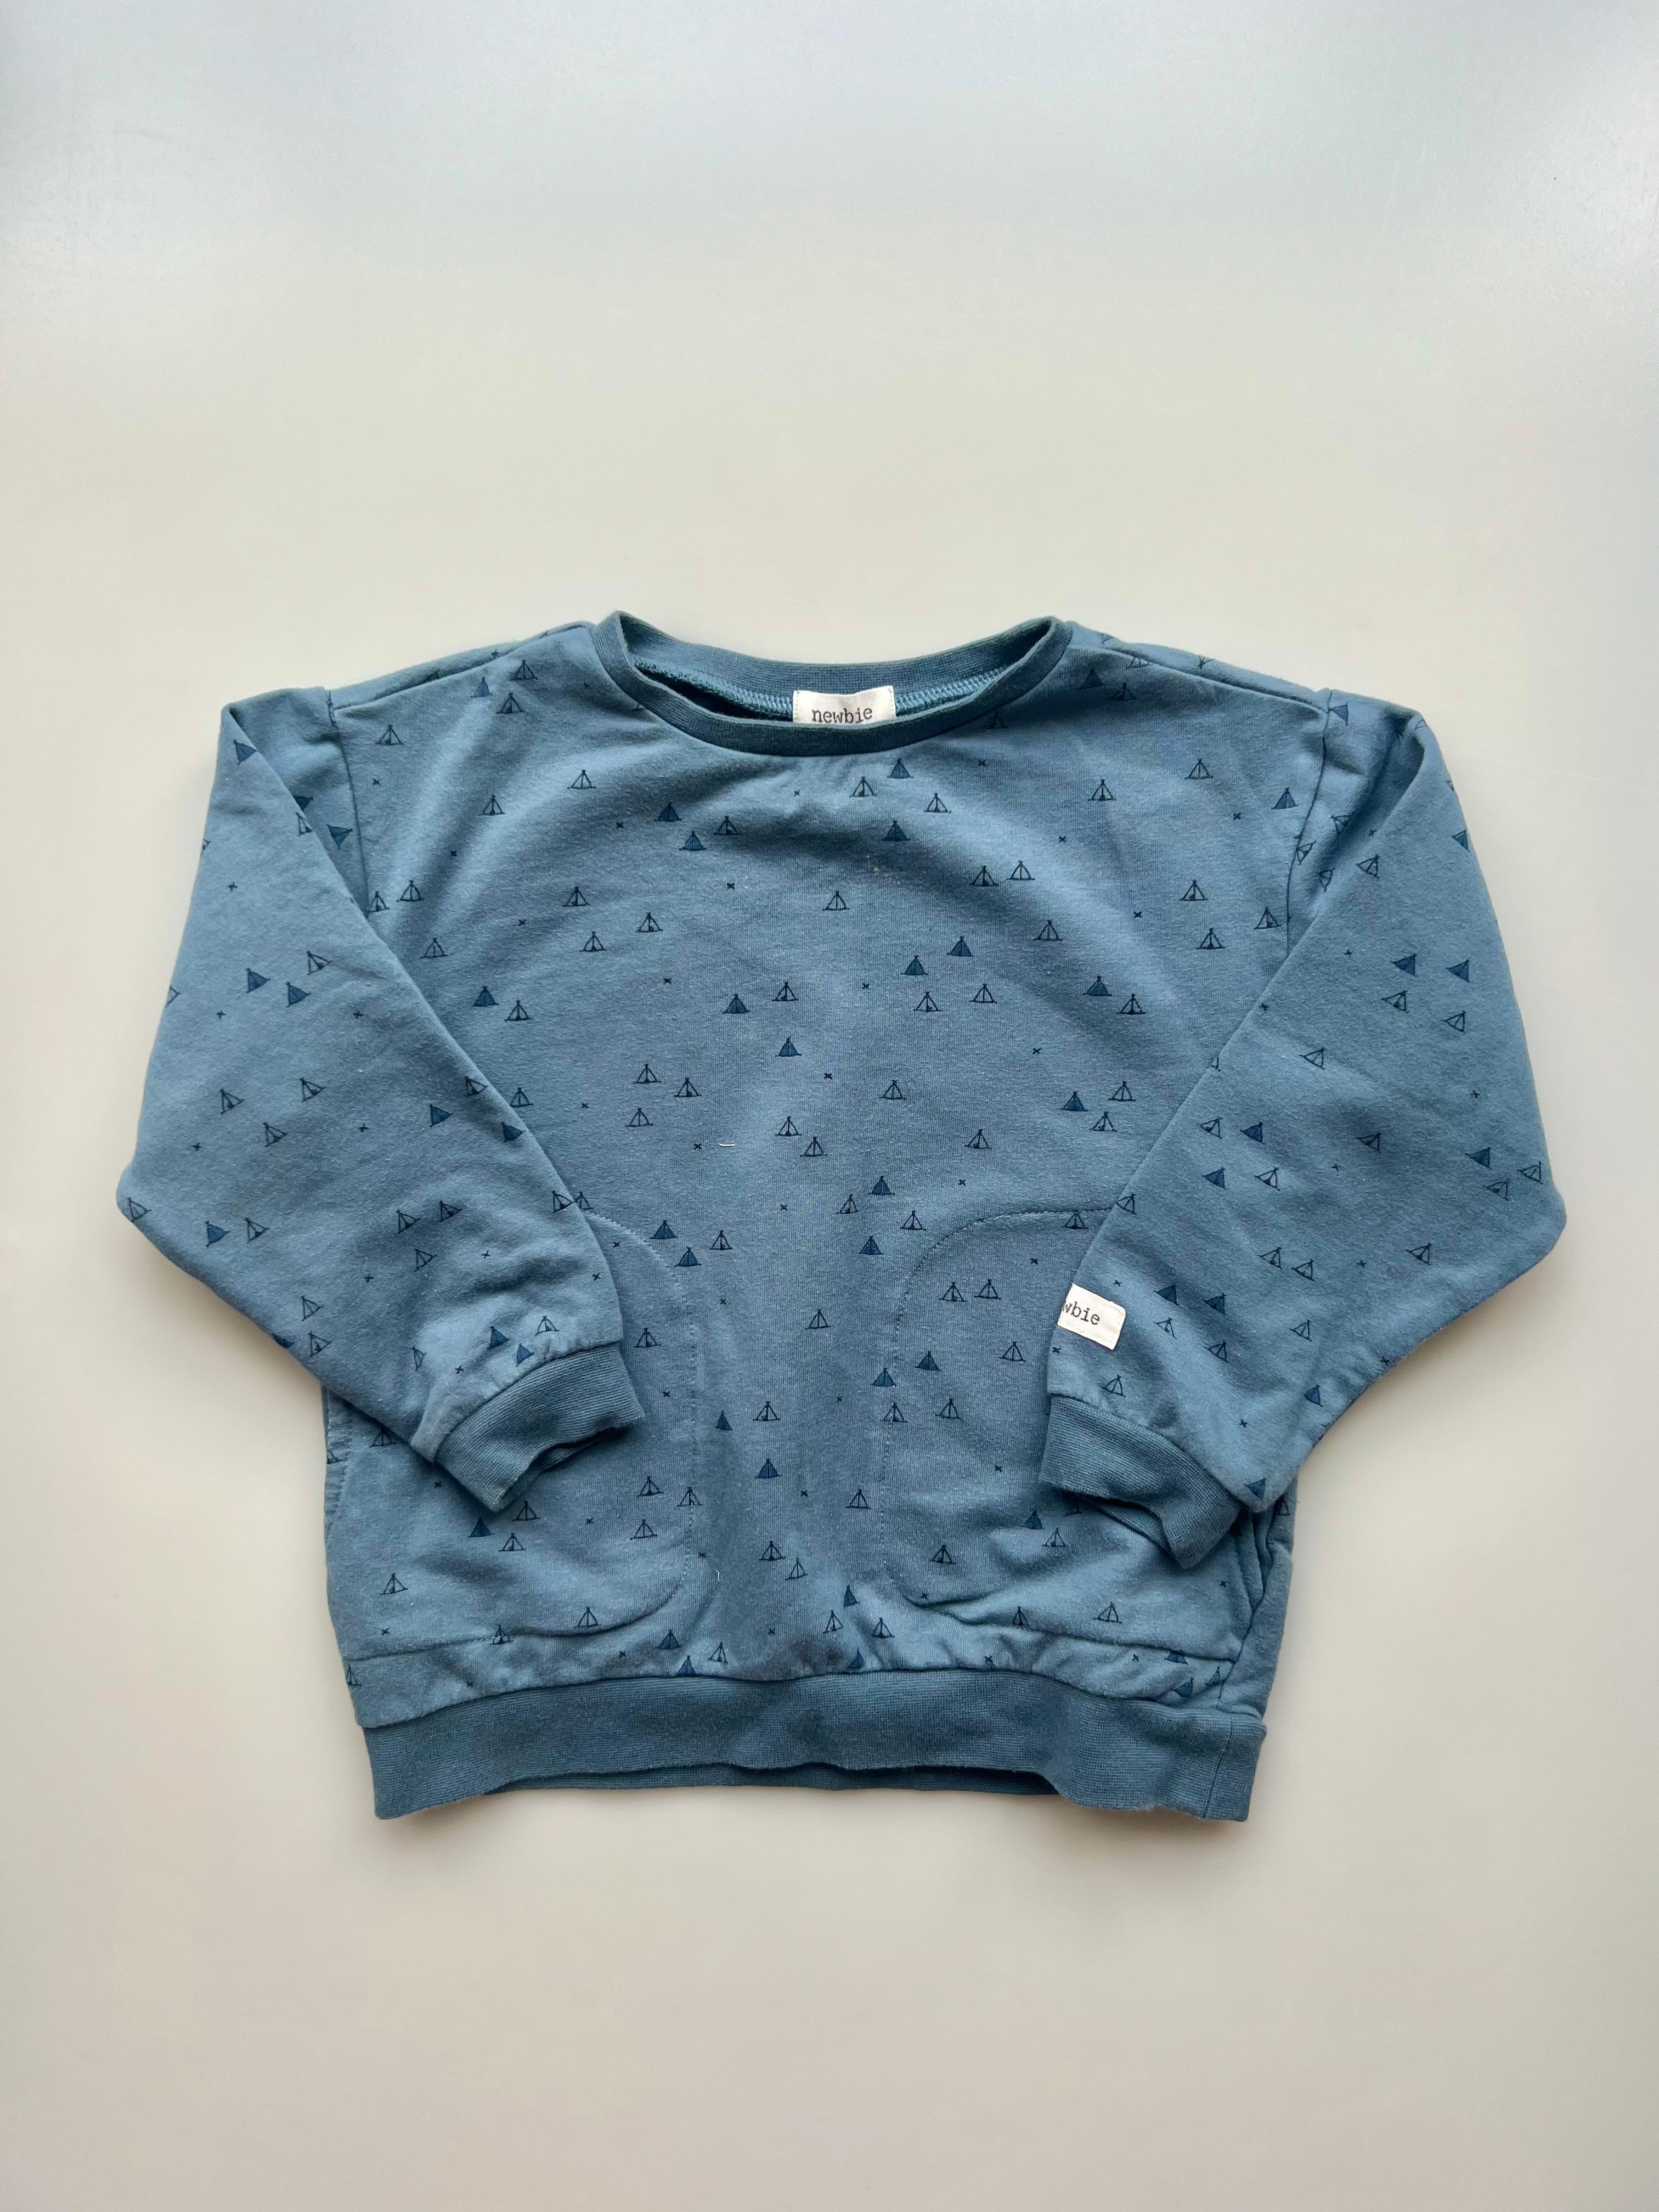 Newbie Blue Tents Sweatshirt 18-24 Months